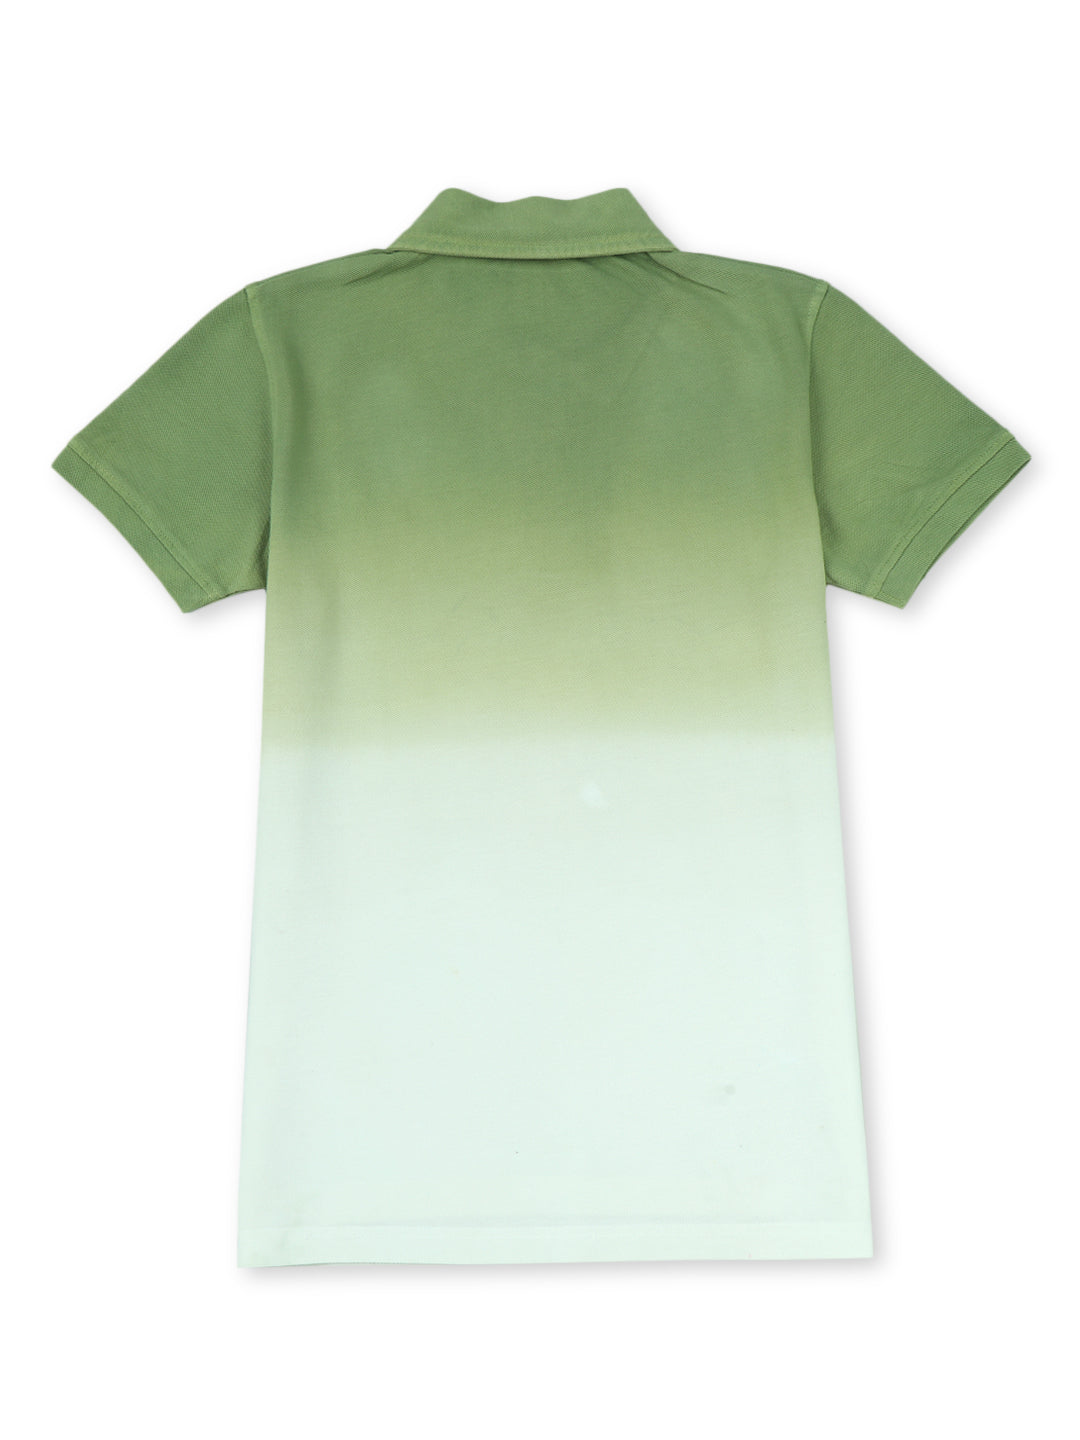 Boys Green Cotton Ombre dyed Polo T-Shirt